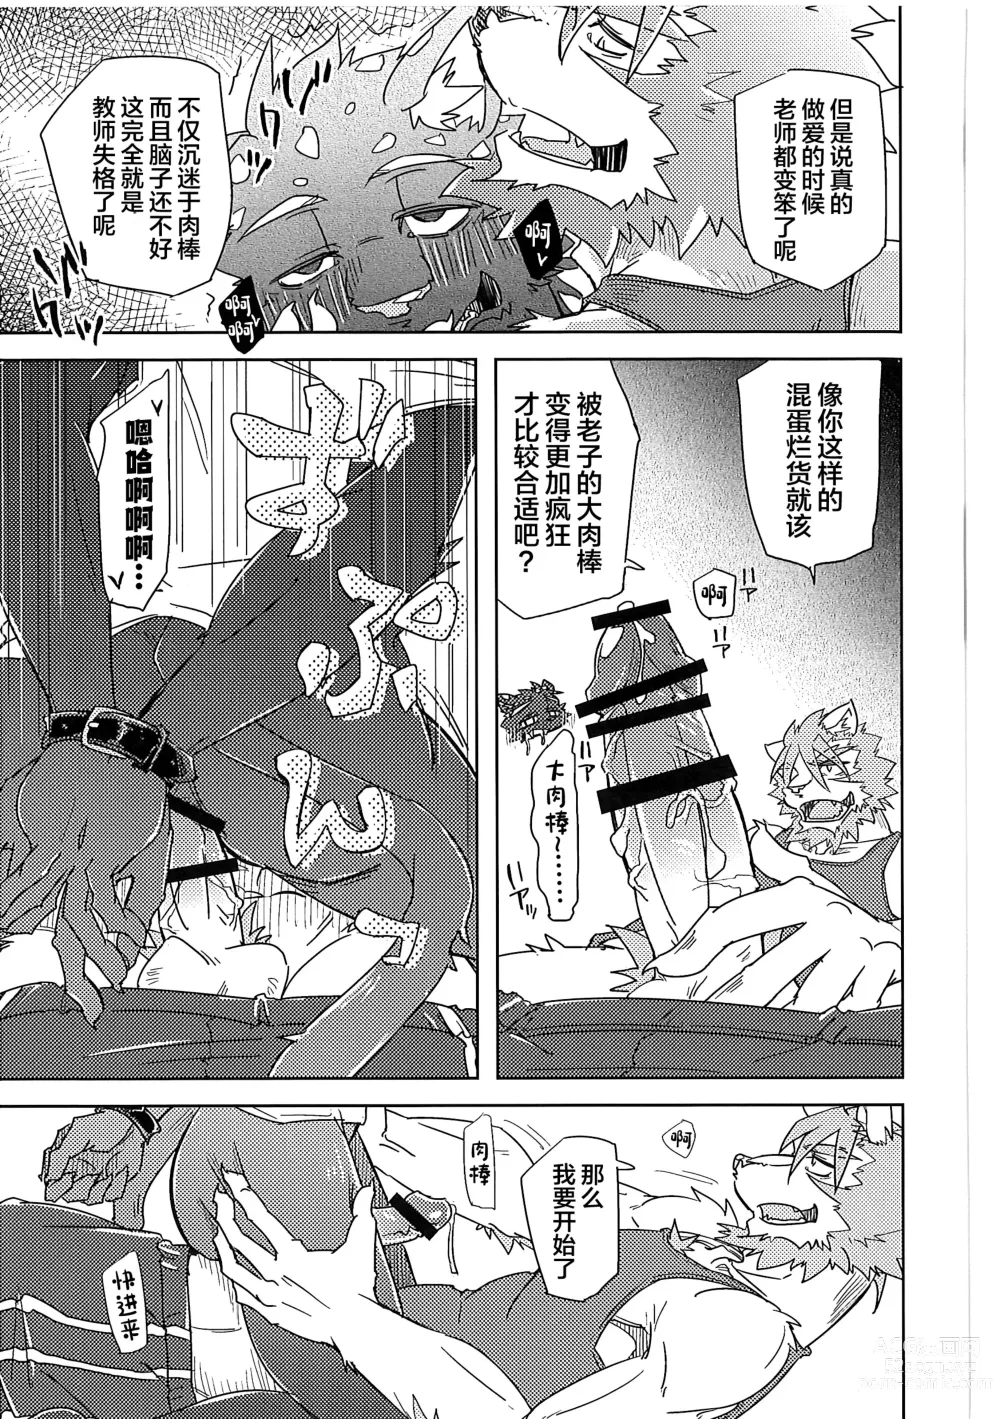 Page 26 of doujinshi Crazy Waltz